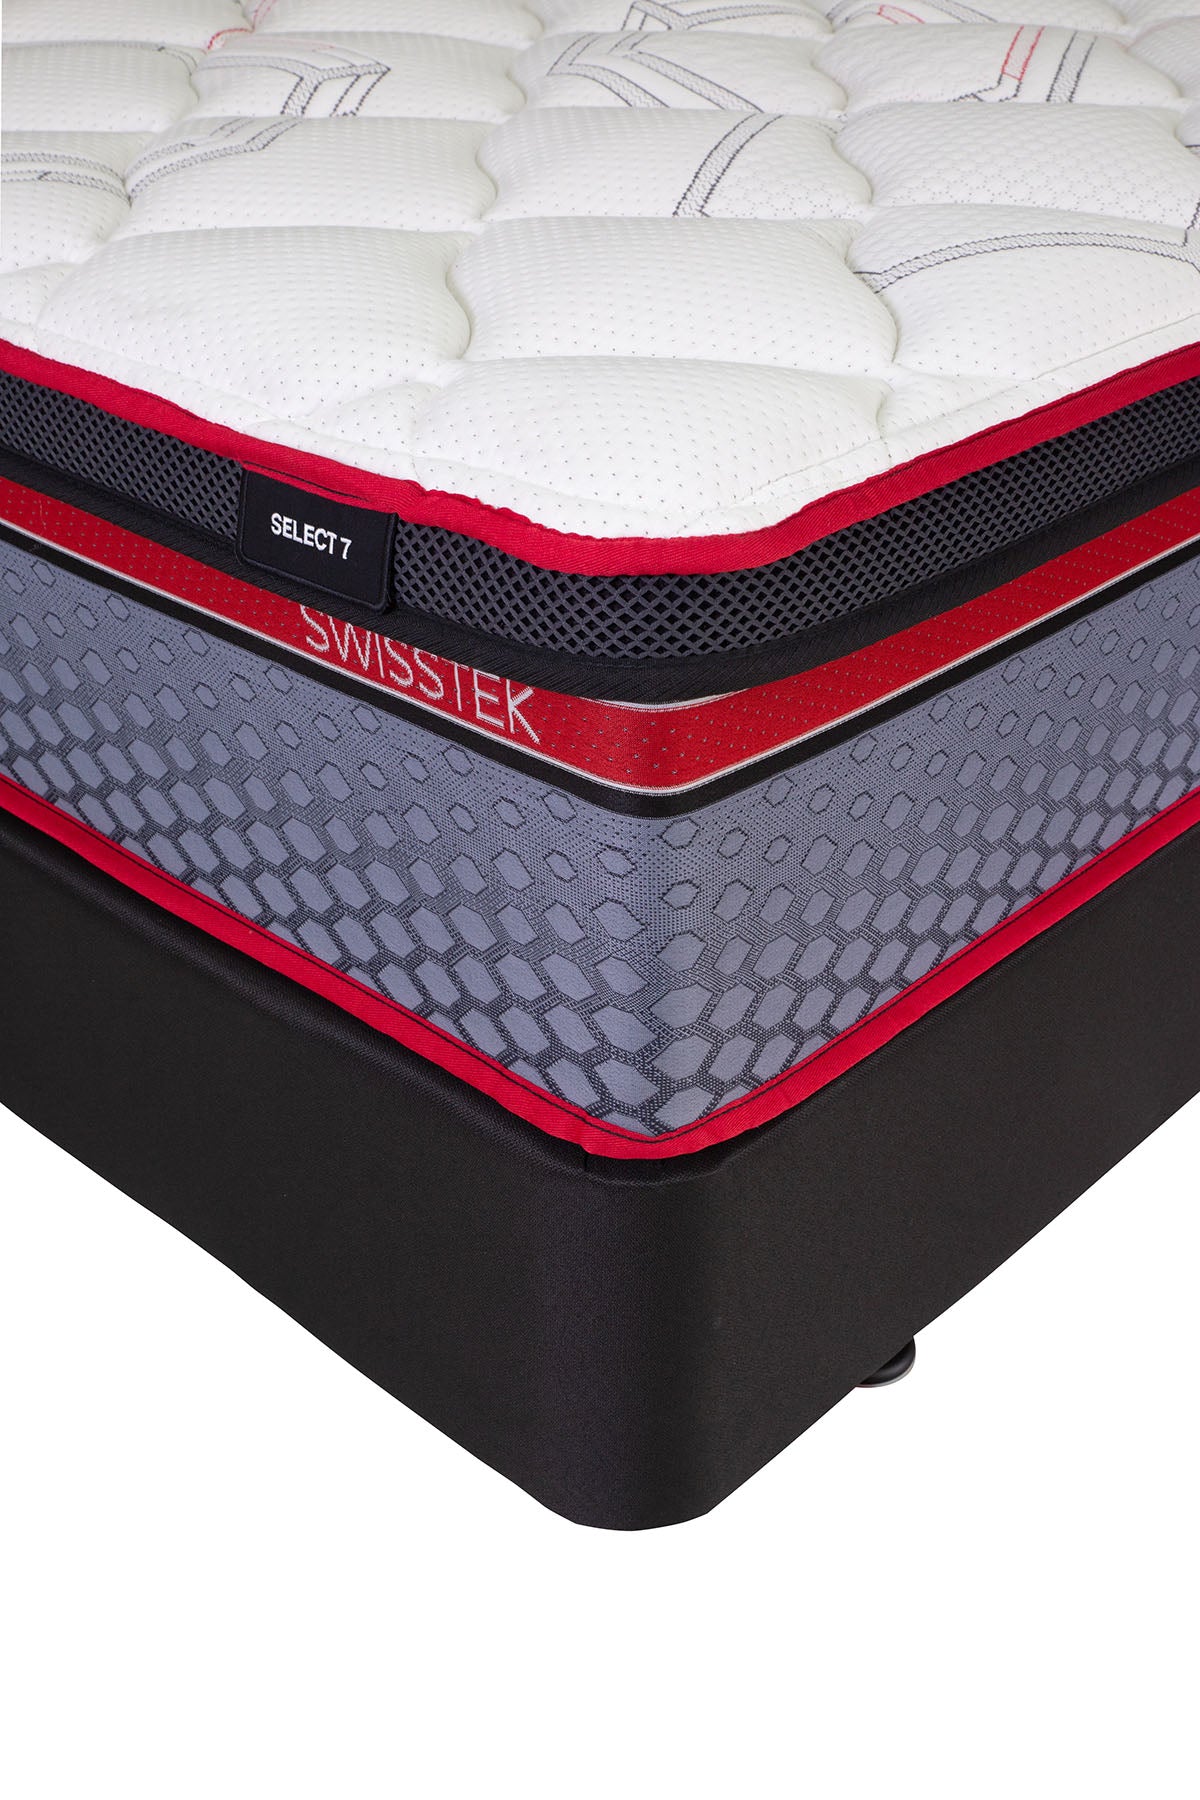 select7-king-mattress-3